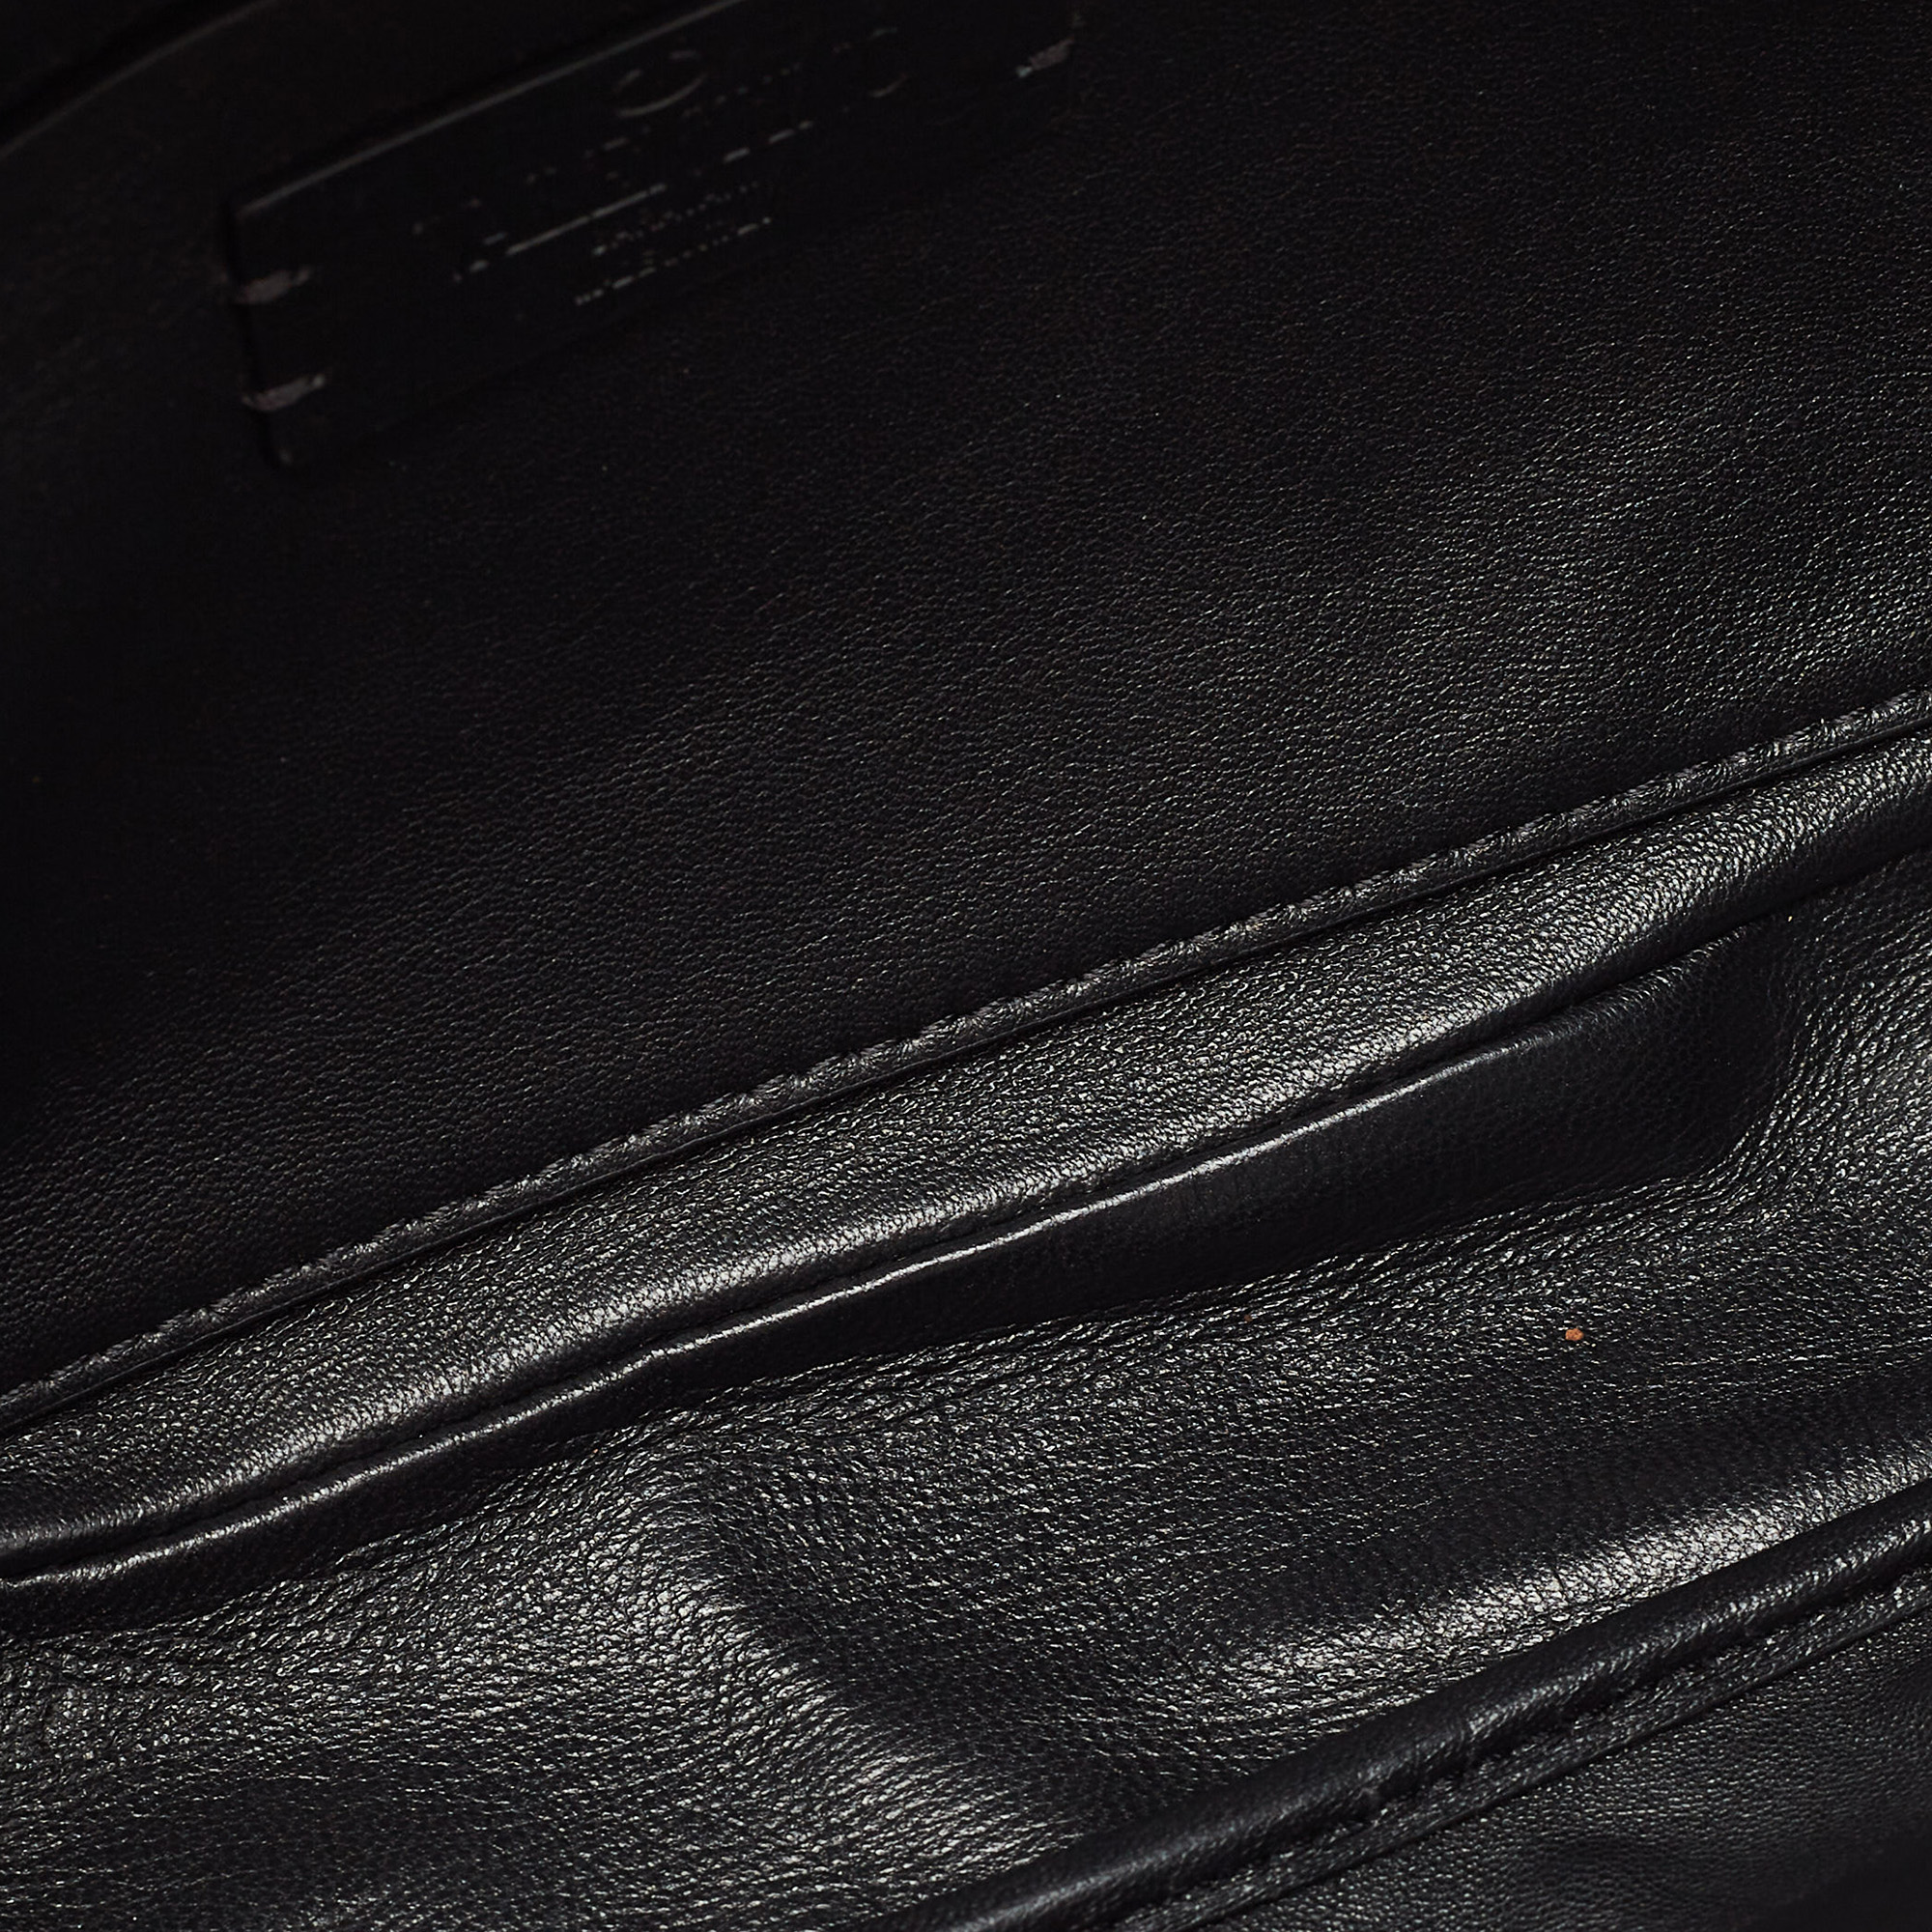 Valentino Black Leather VSling Crossbody Bag